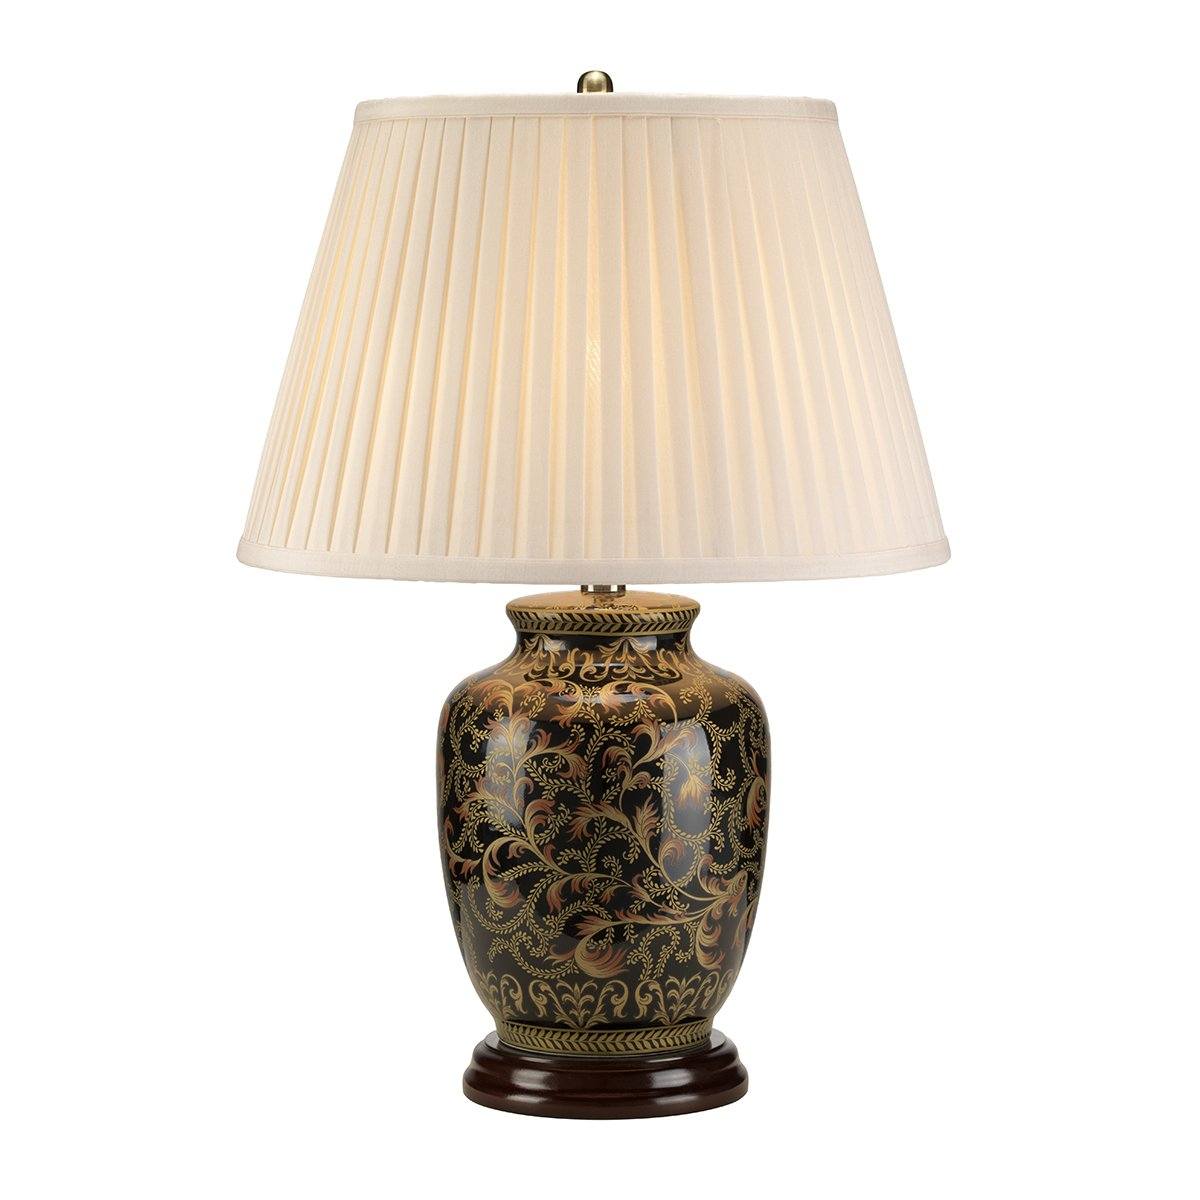 Mottingham Gold/Black Small Table Lamp c/w Shade - ID 8382